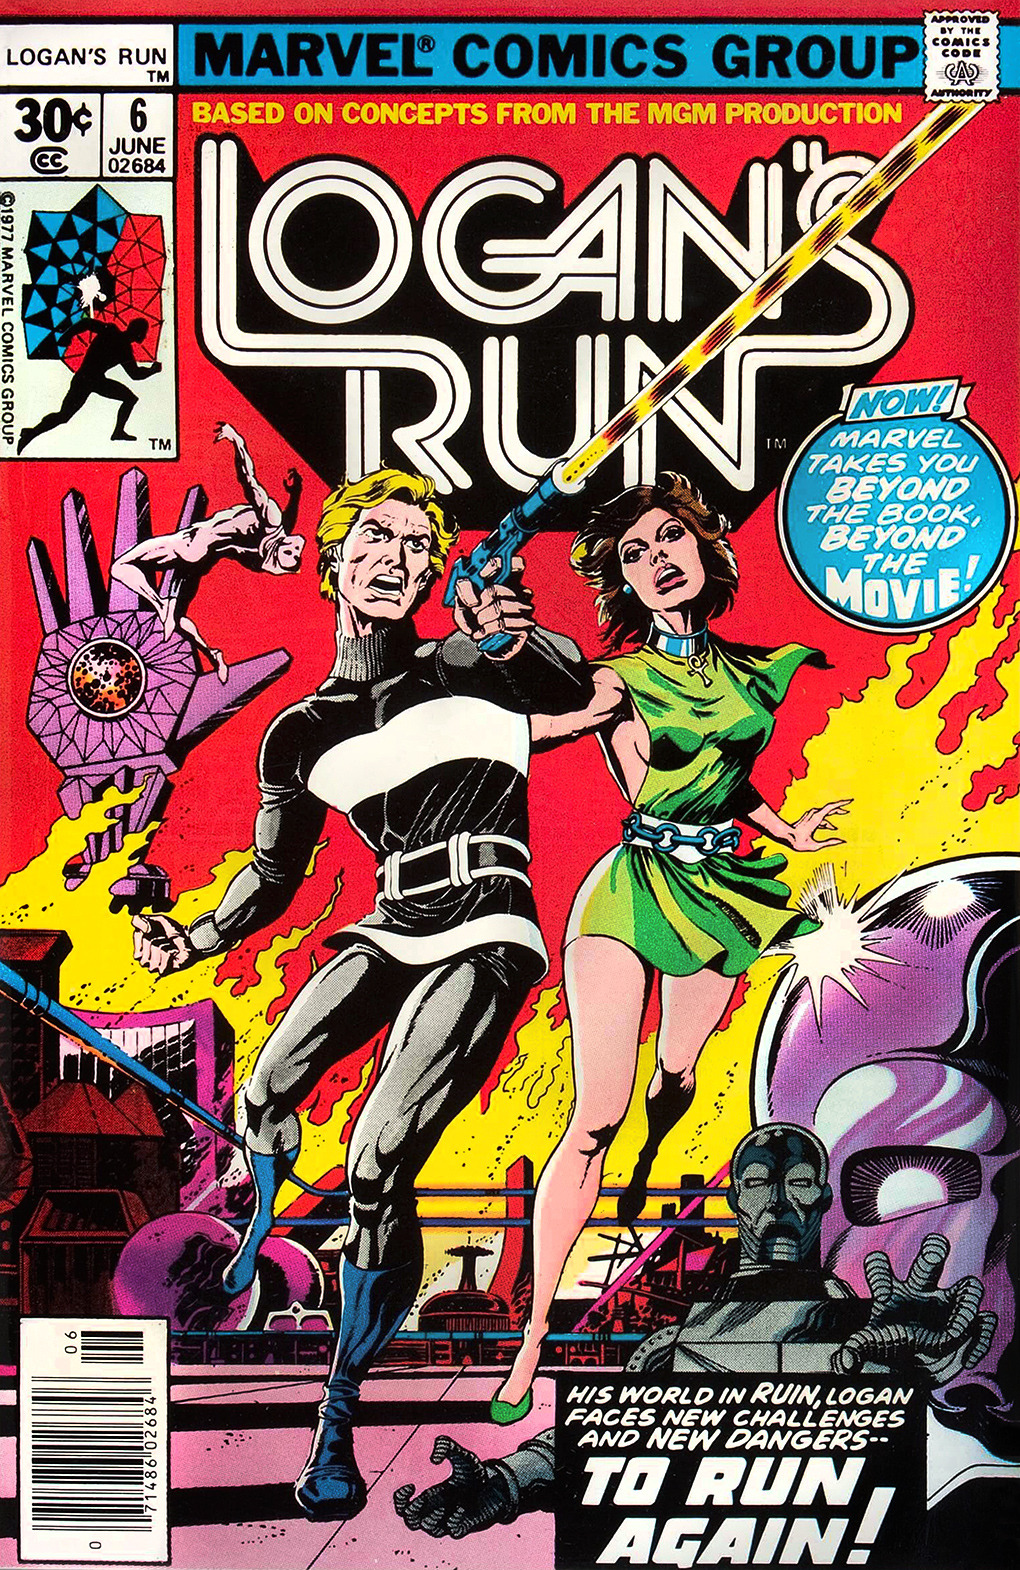 LOGAN’S RUN #6 (1977) Cover Art by Paul Gulacy